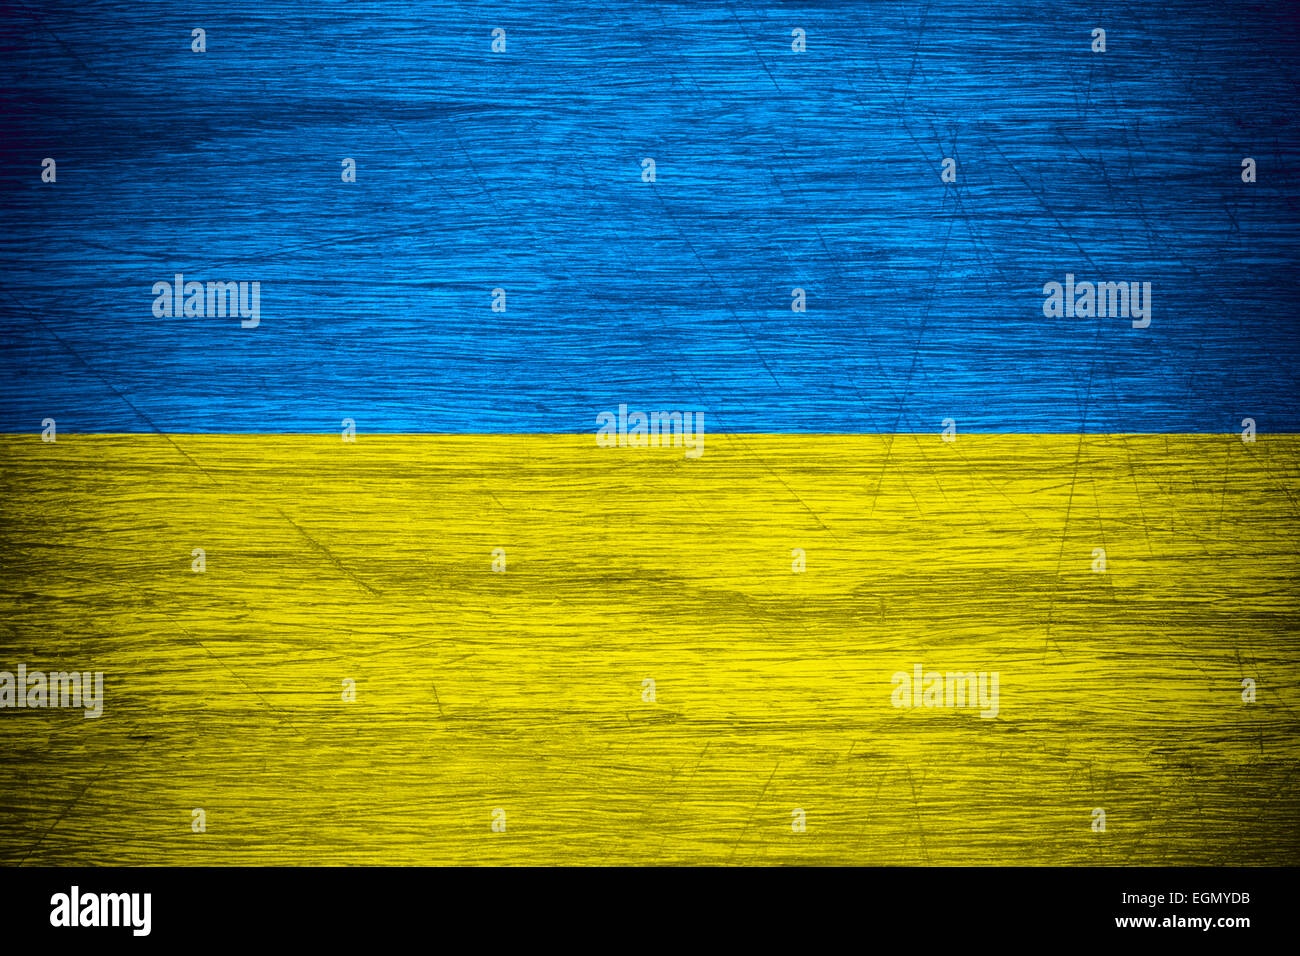 Ukraine flag or banner on wooden texture Stock Photo